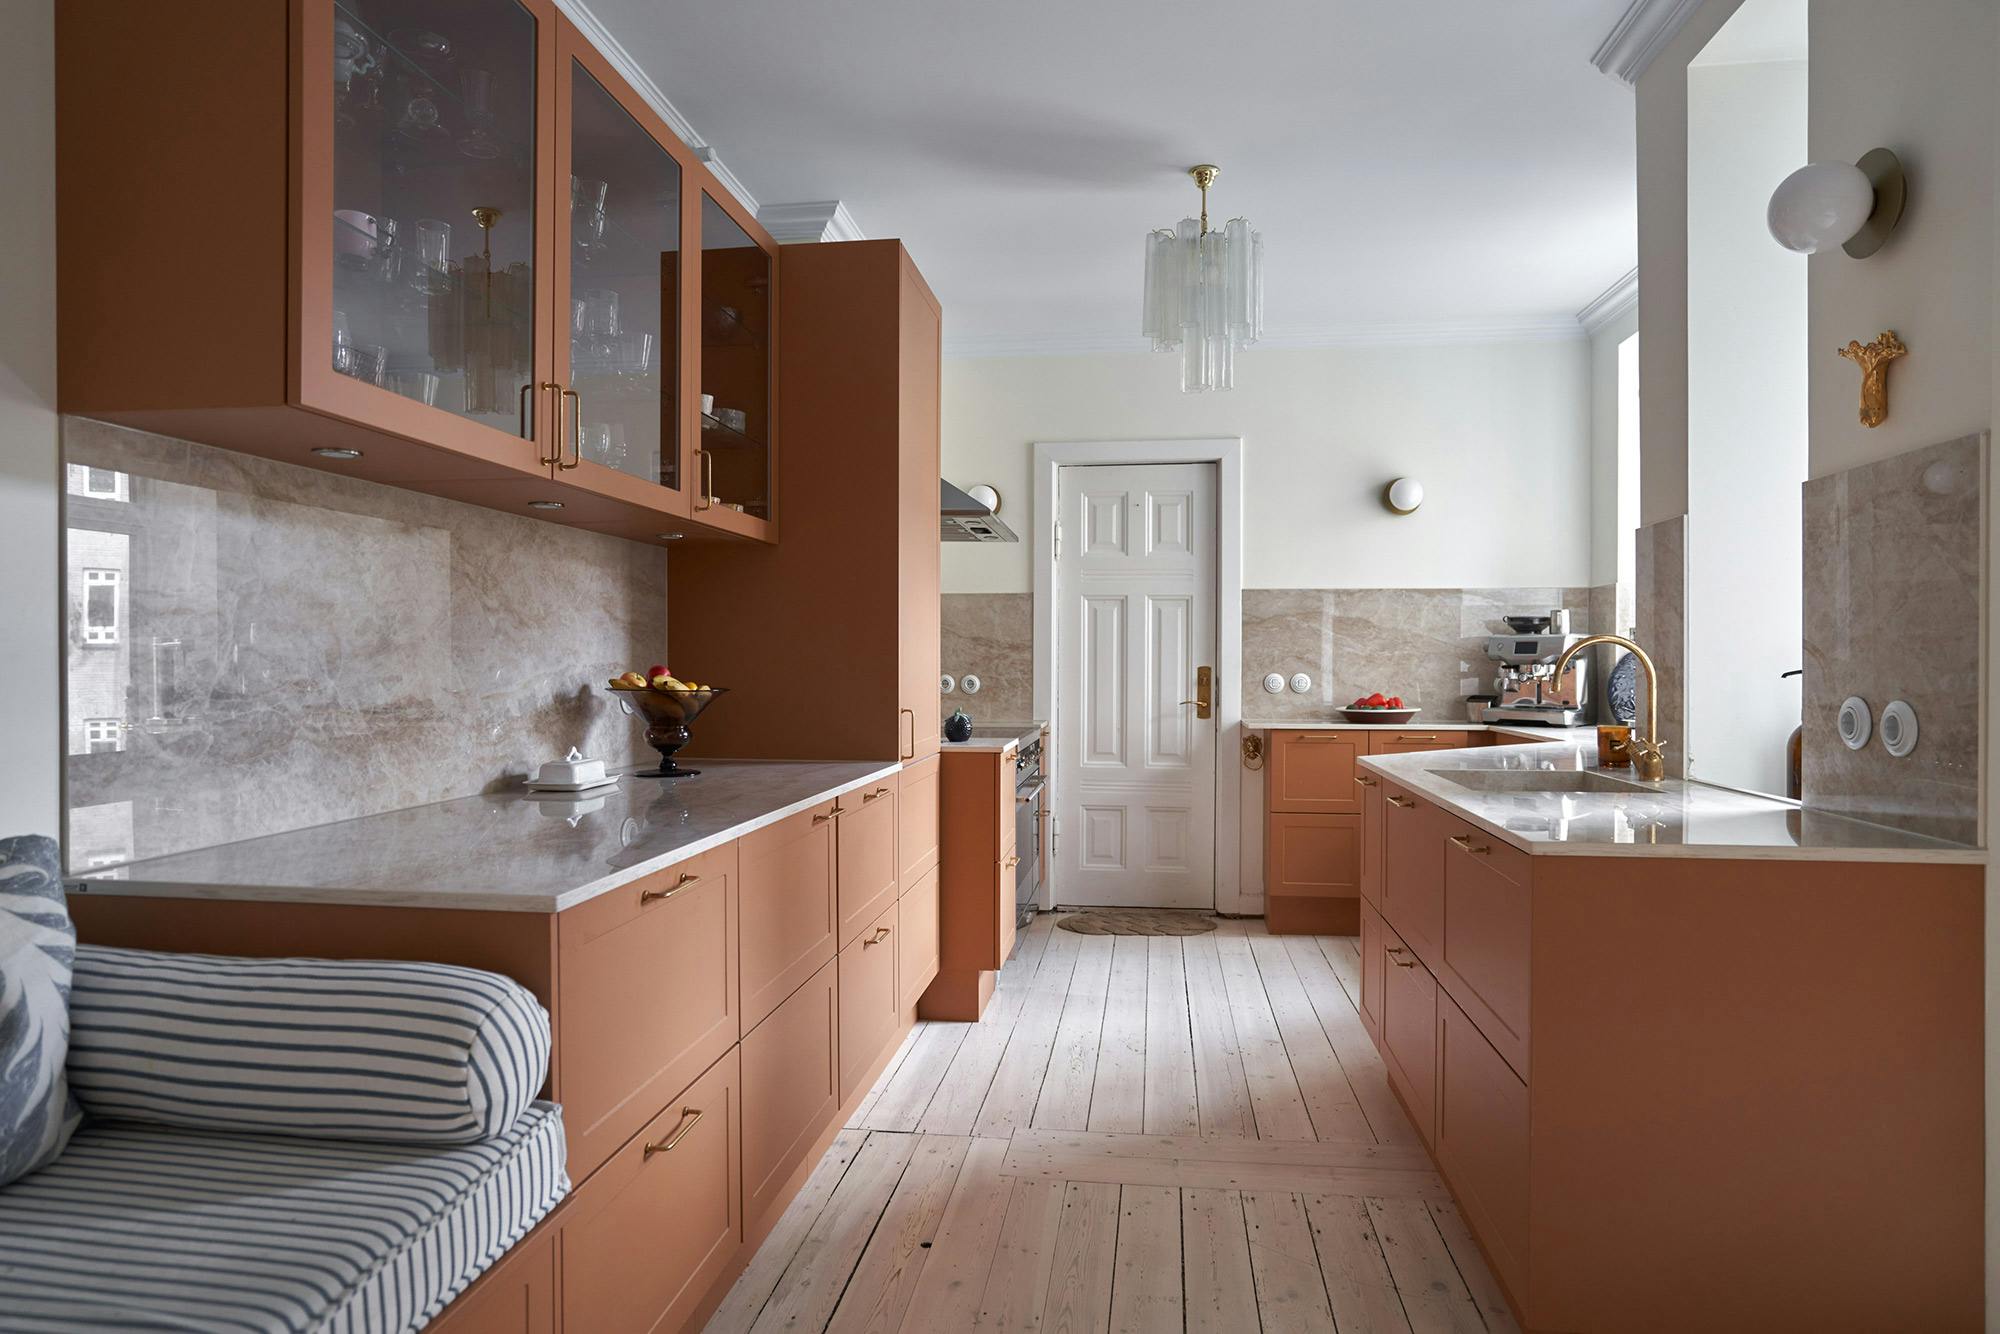 Imagem número 32 da actual secção de Dekton Arga creates an elegant atmosphere in this open plan kitchen with a minimalist approach da Cosentino Portugal